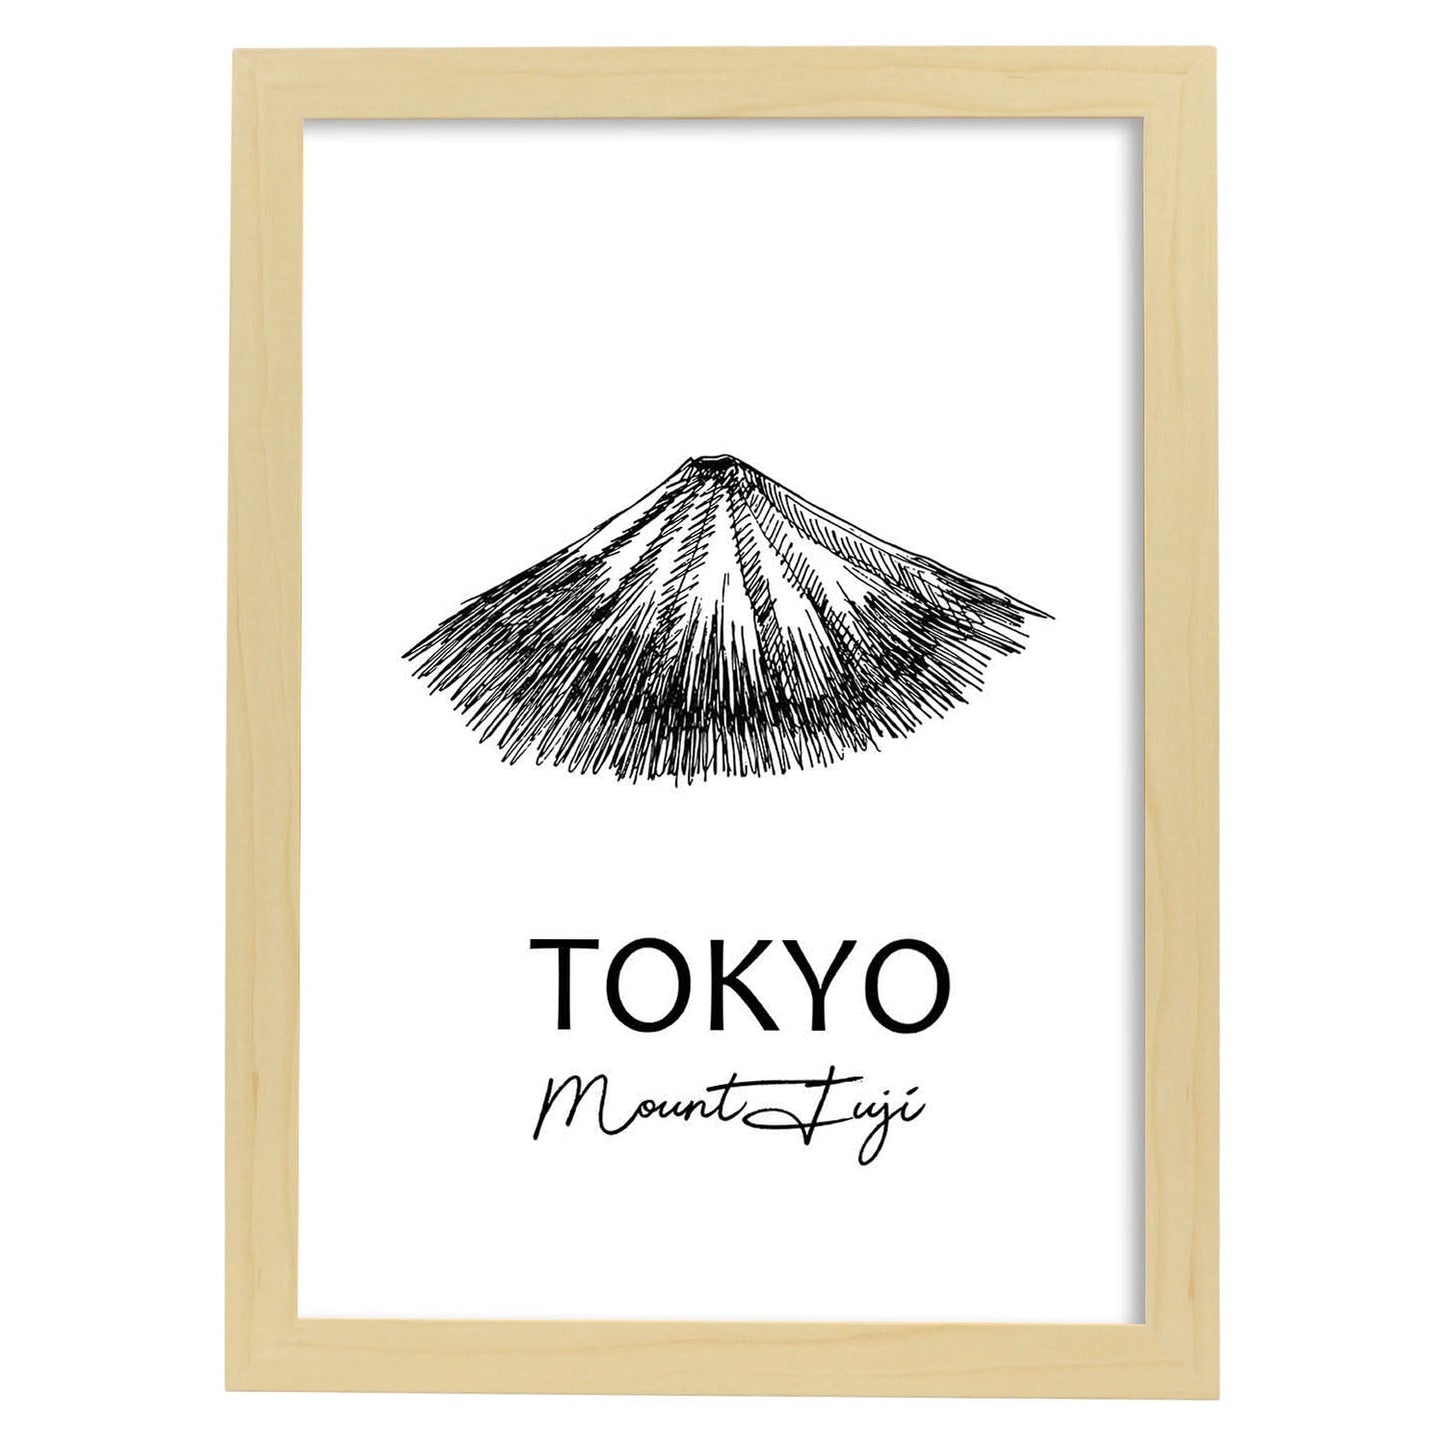 Poster de Tokyo - Monte Fuji. Láminas con monumentos de ciudades.-Artwork-Nacnic-A4-Marco Madera clara-Nacnic Estudio SL